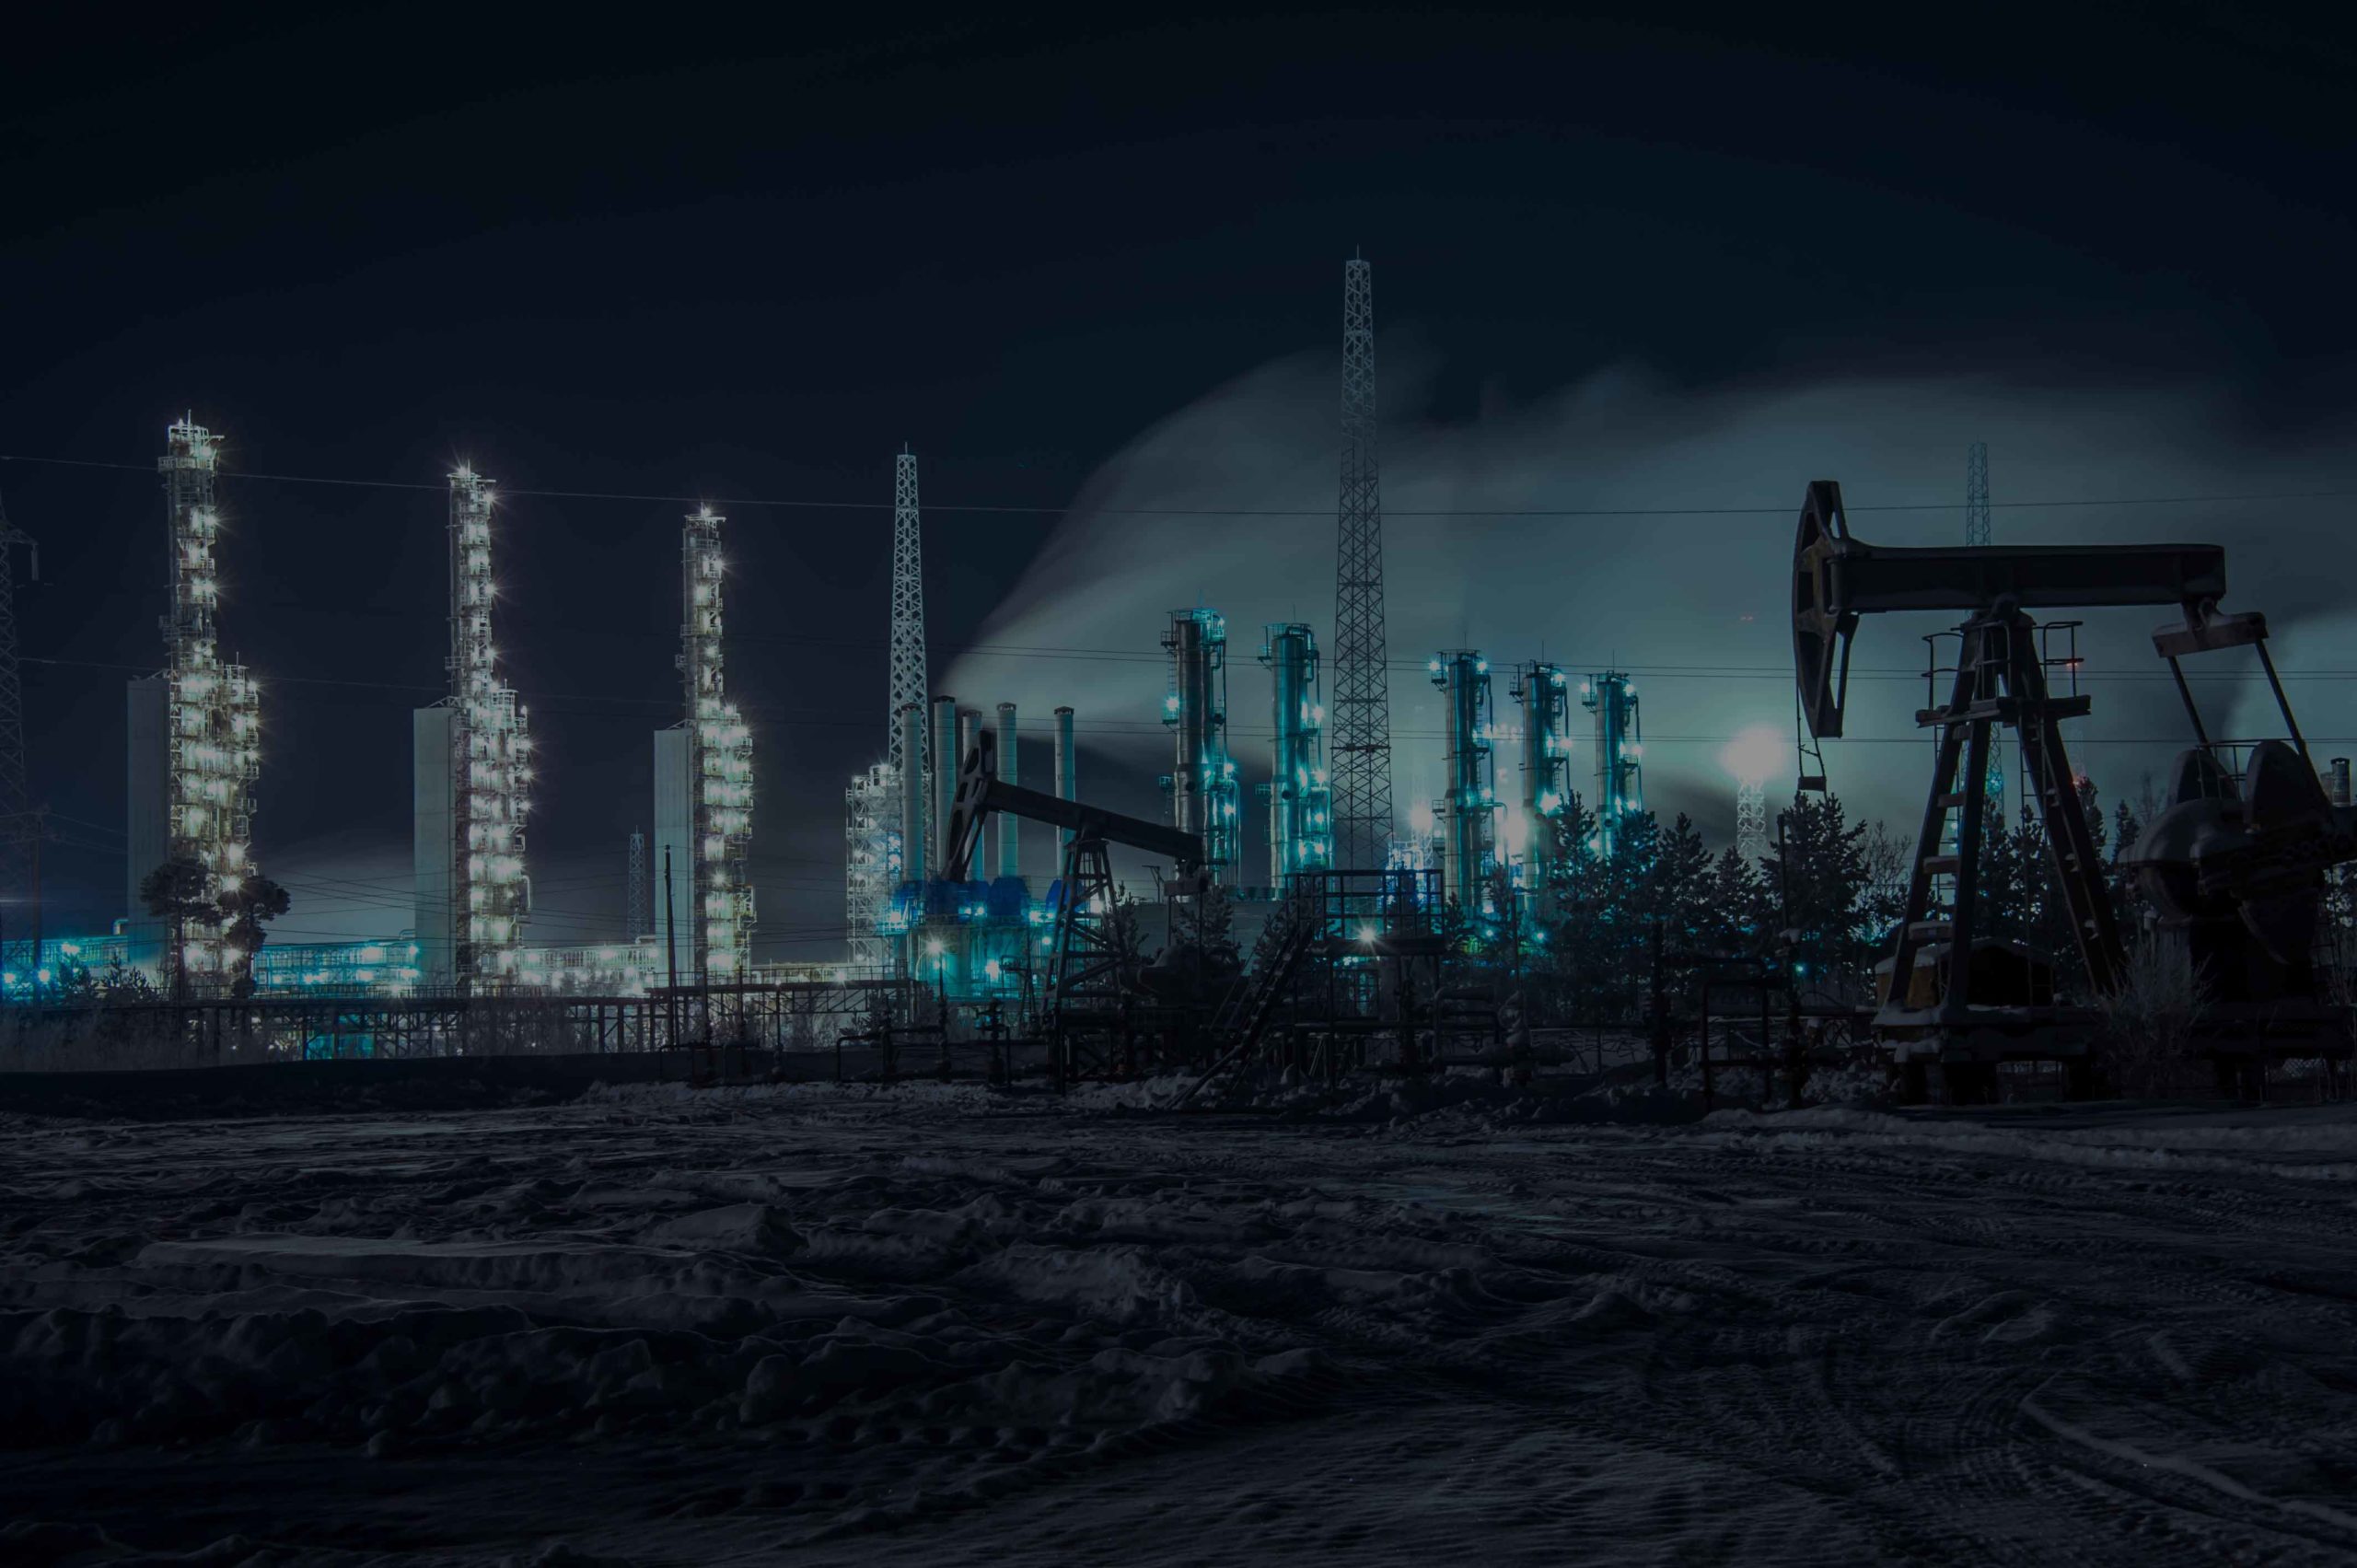 Oil field at night